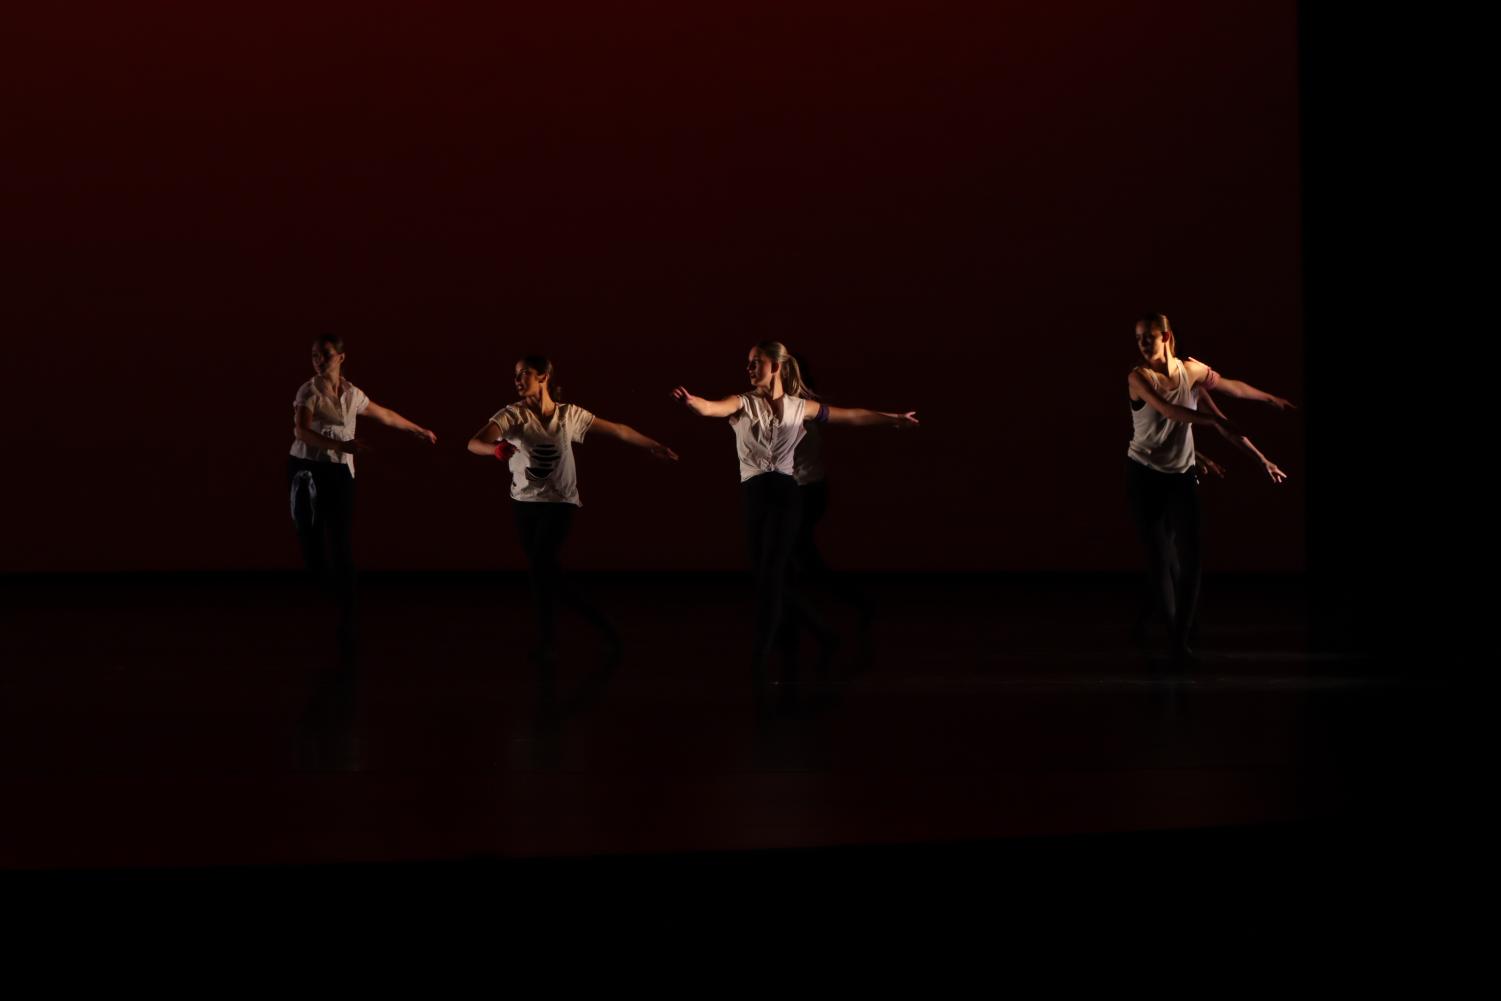 Giordano+Dance+Project%3A+Photostory